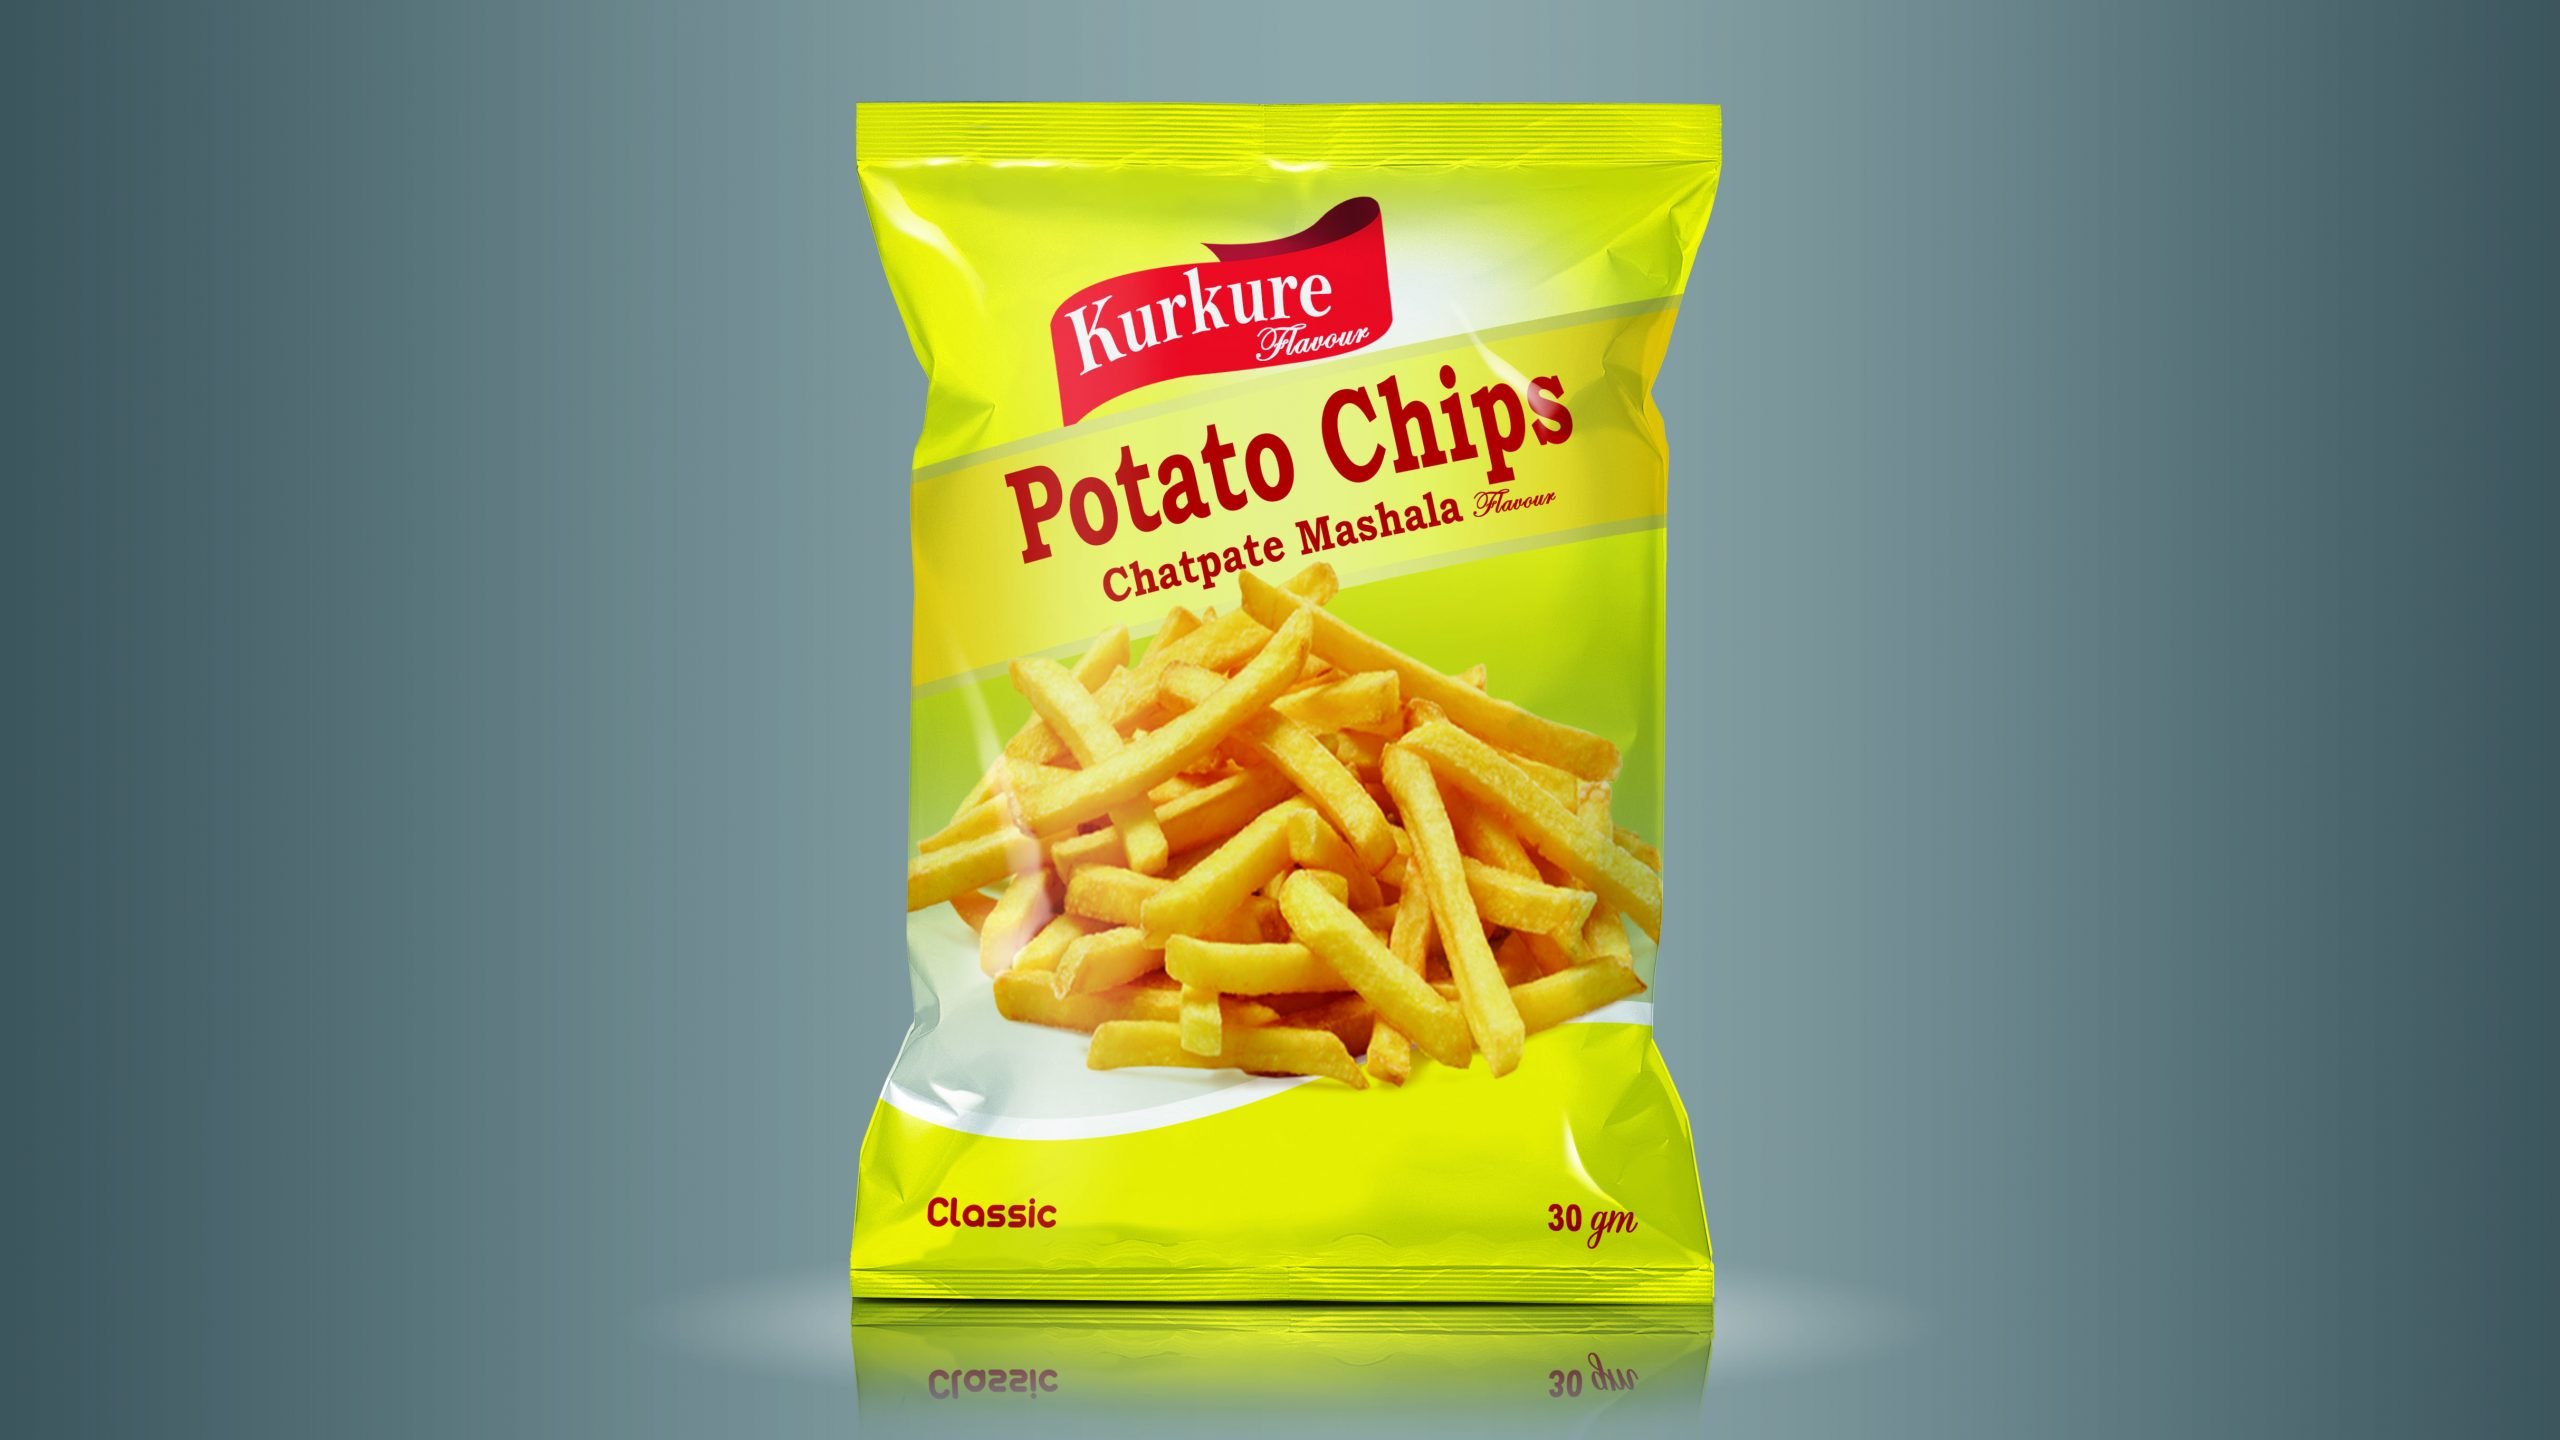 Chips Packaging Design